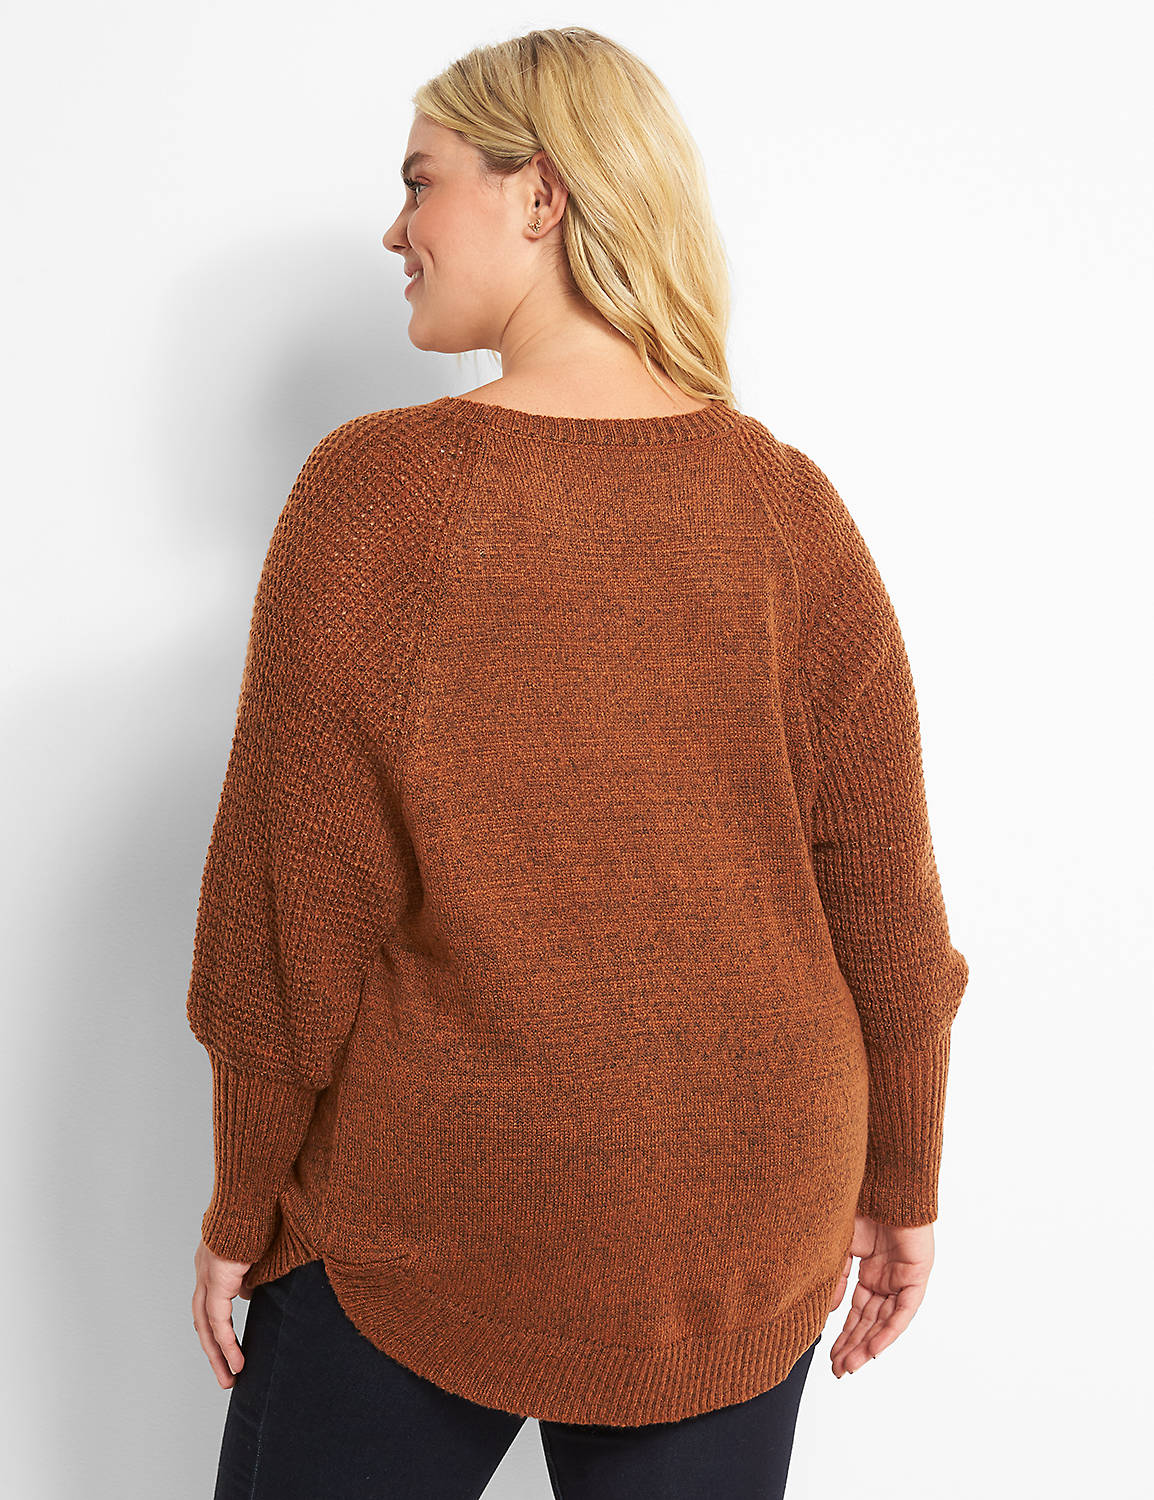 Crew-Neck Curved-Hem Sweater Product Image 2